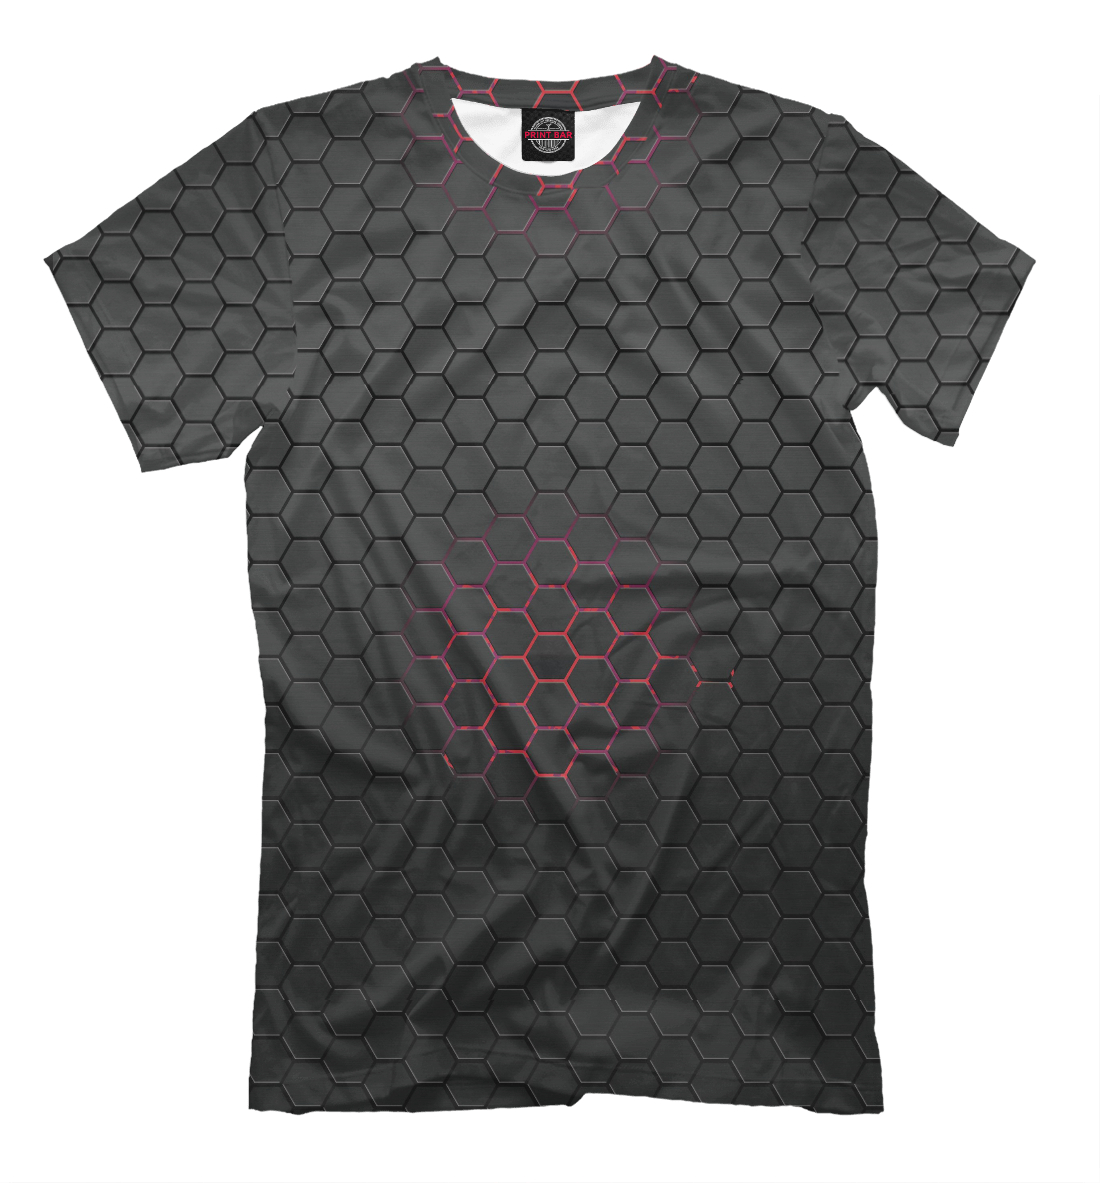 Футболка Red Honeycomb для мужчин, артикул: APD-167414-fut-2mp